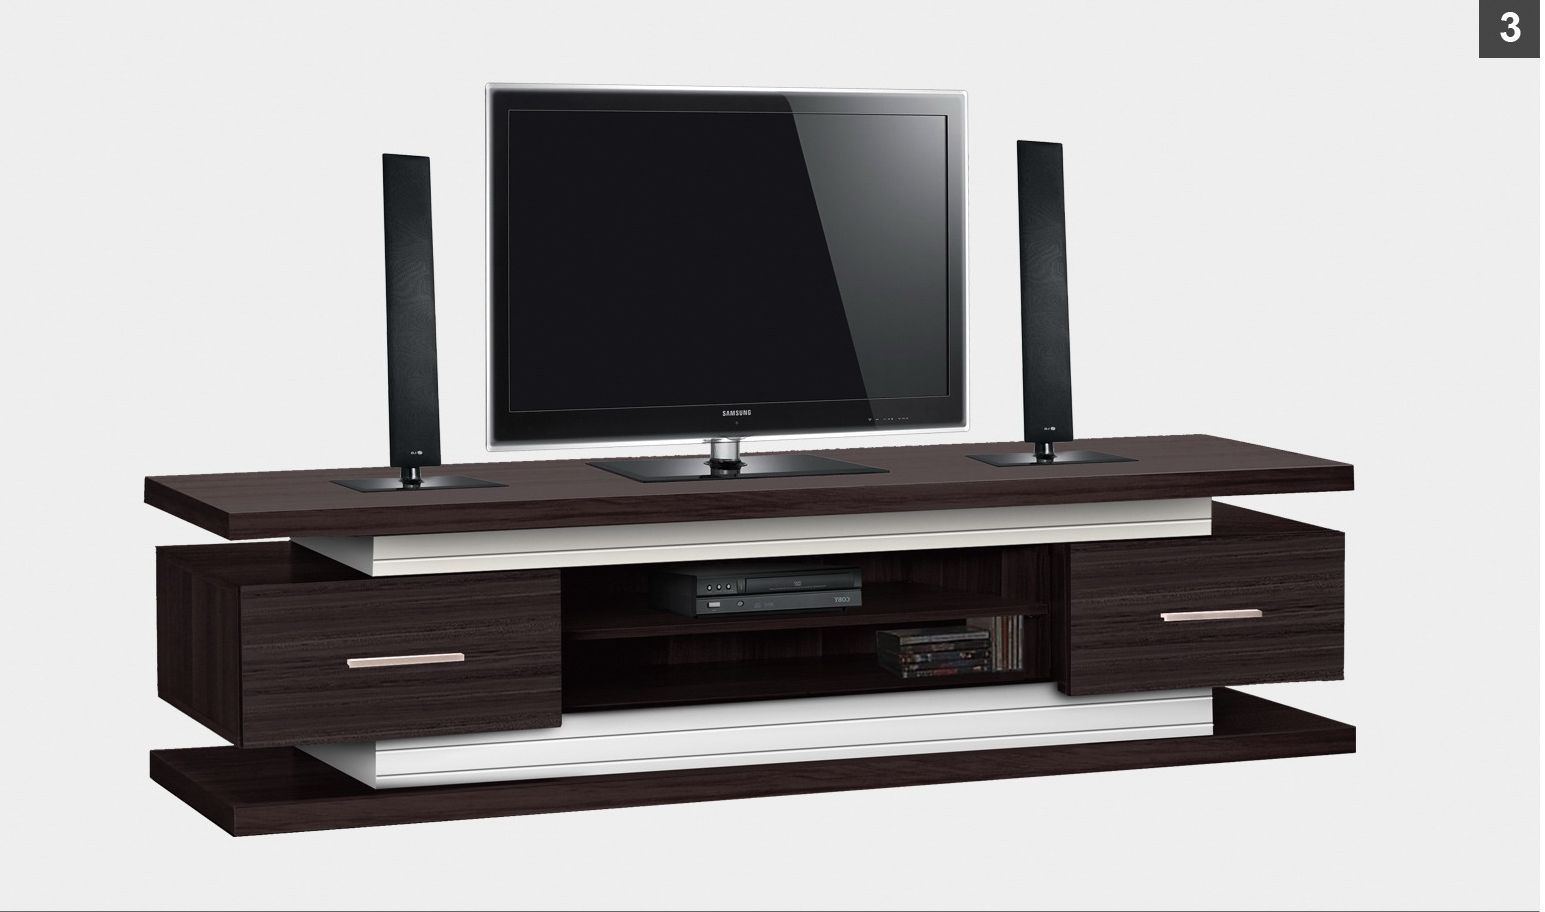  Rak  TV  Score VR033 Furniture  Collections